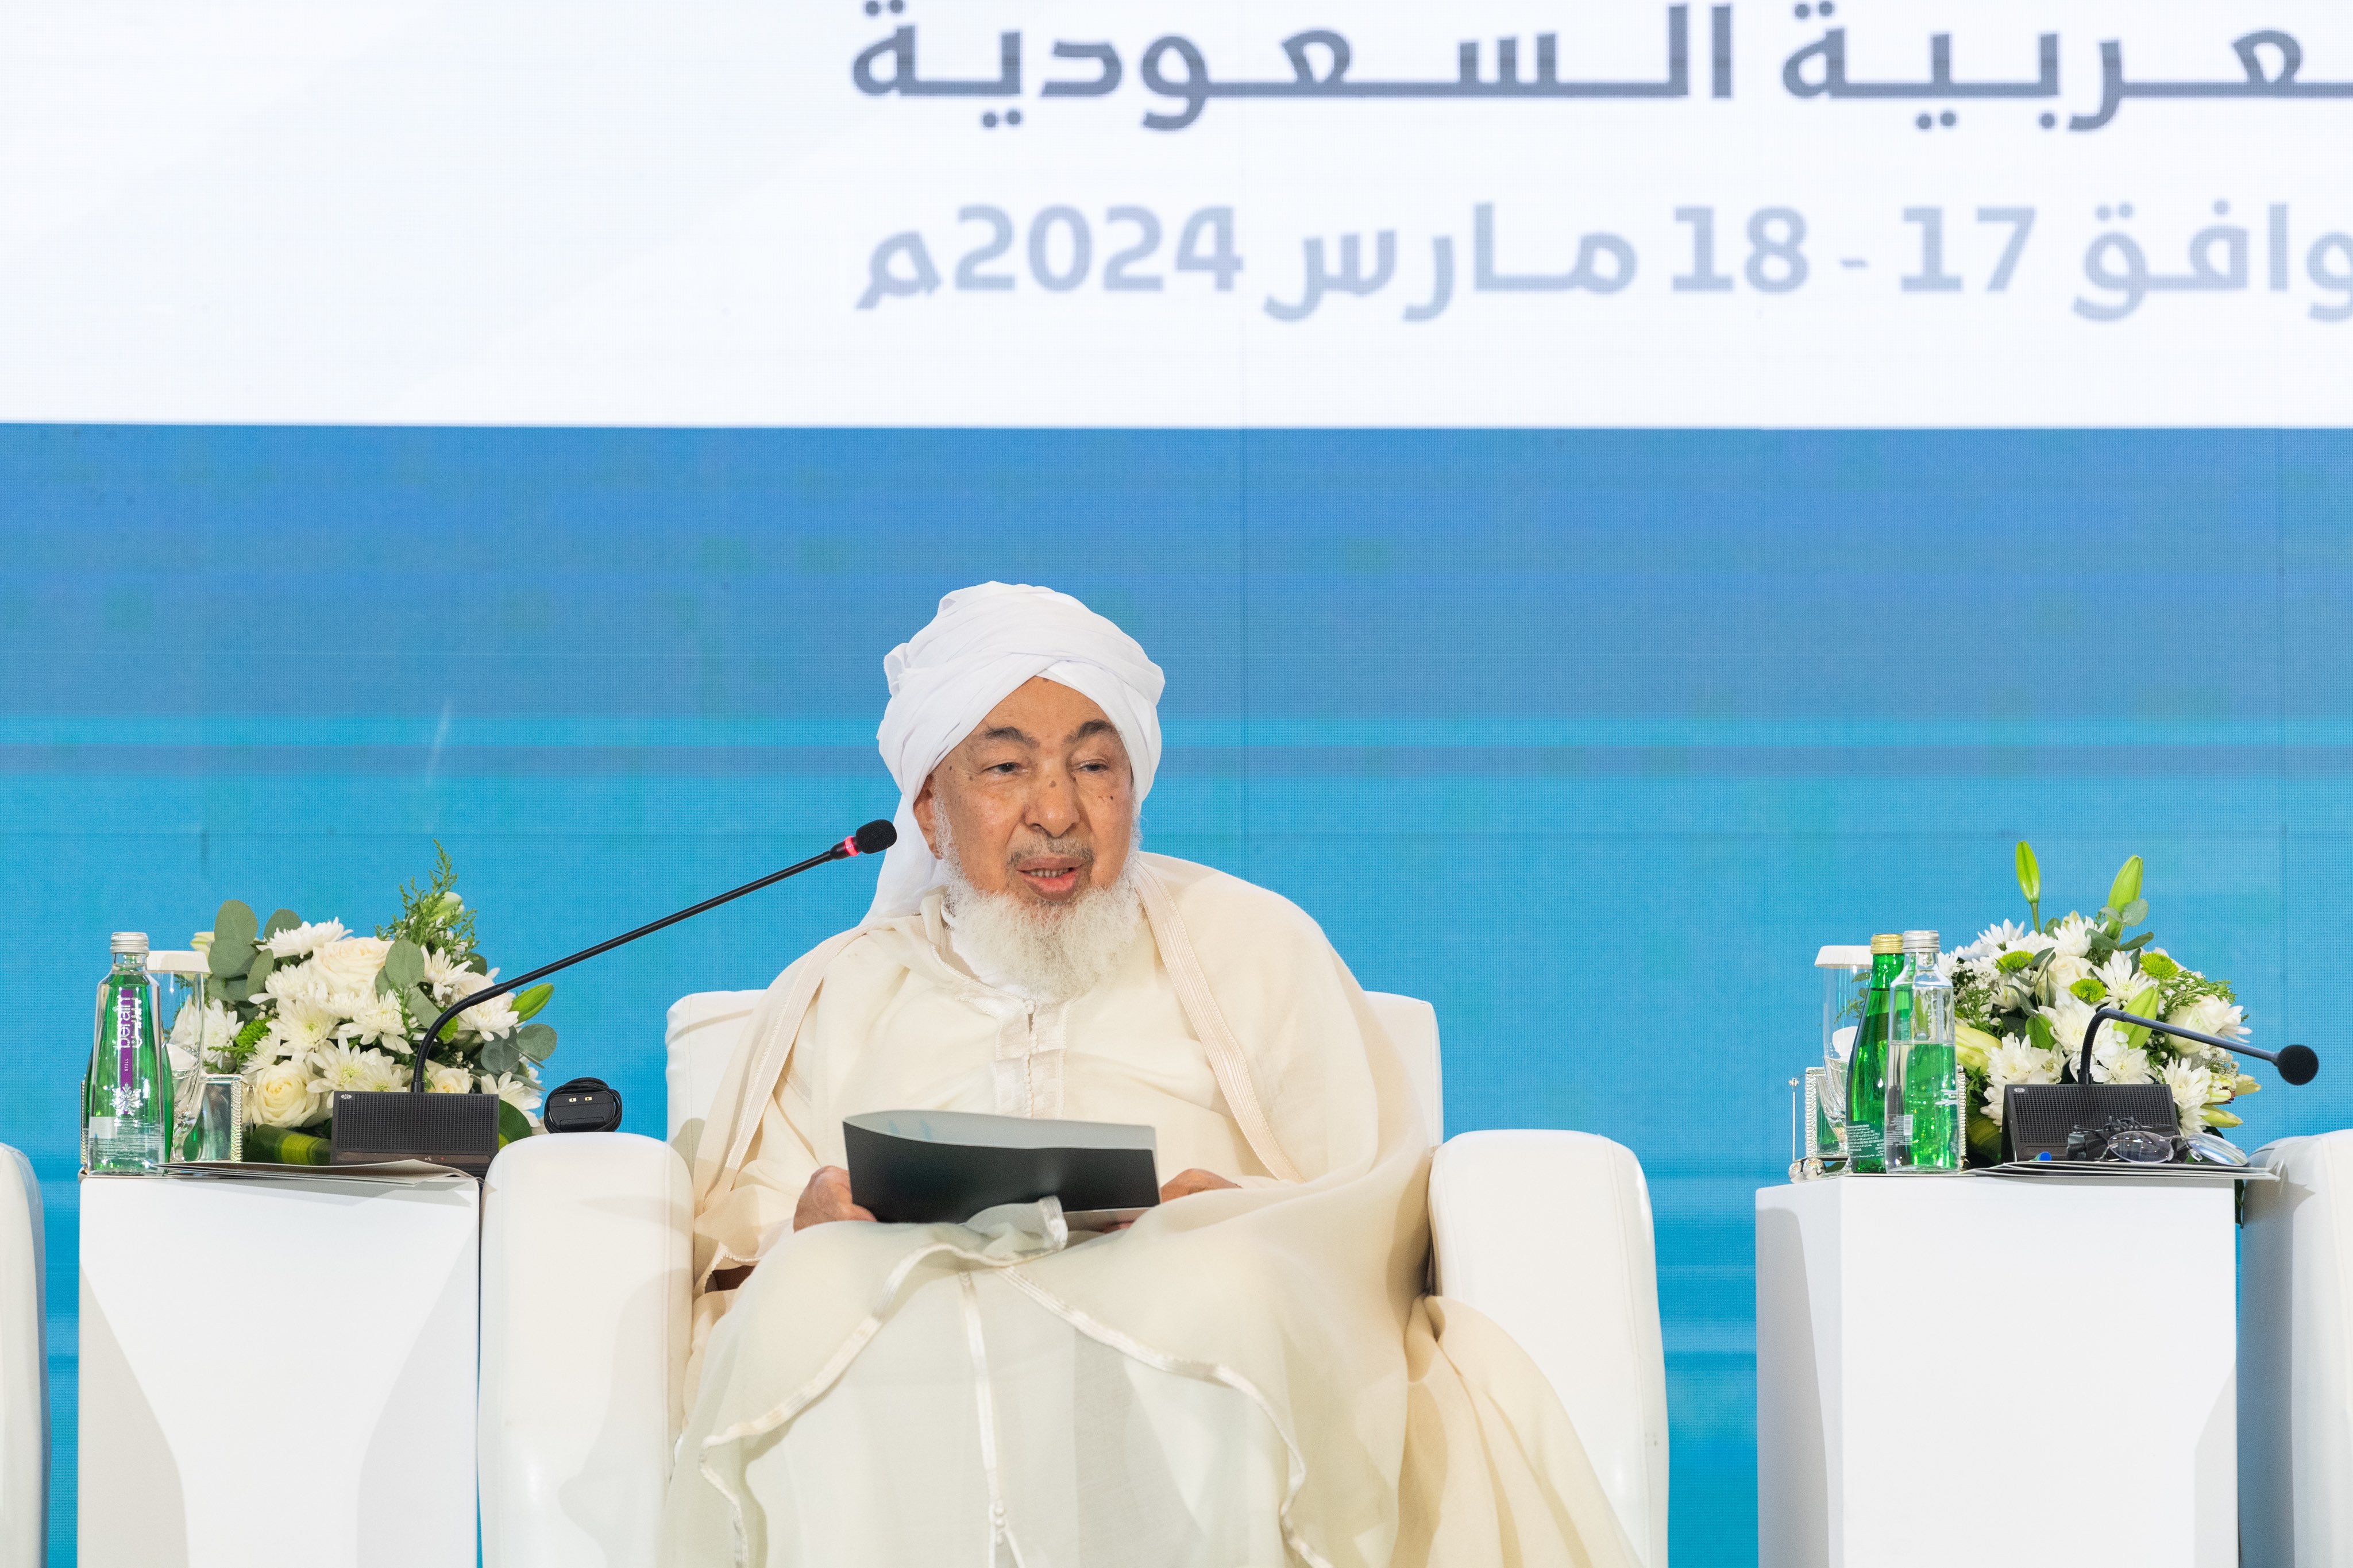 Yang Mulia Syekh Abdullah bin Mahfudh bin Bayyah, Ketua Dewan Fatwa Emirat Arab, anggota Akademi Fikih Islam, dalam pidatonya pada sesi pembukaan konferensi: “Membangun Jembatan Antar Mazhab Islam”: